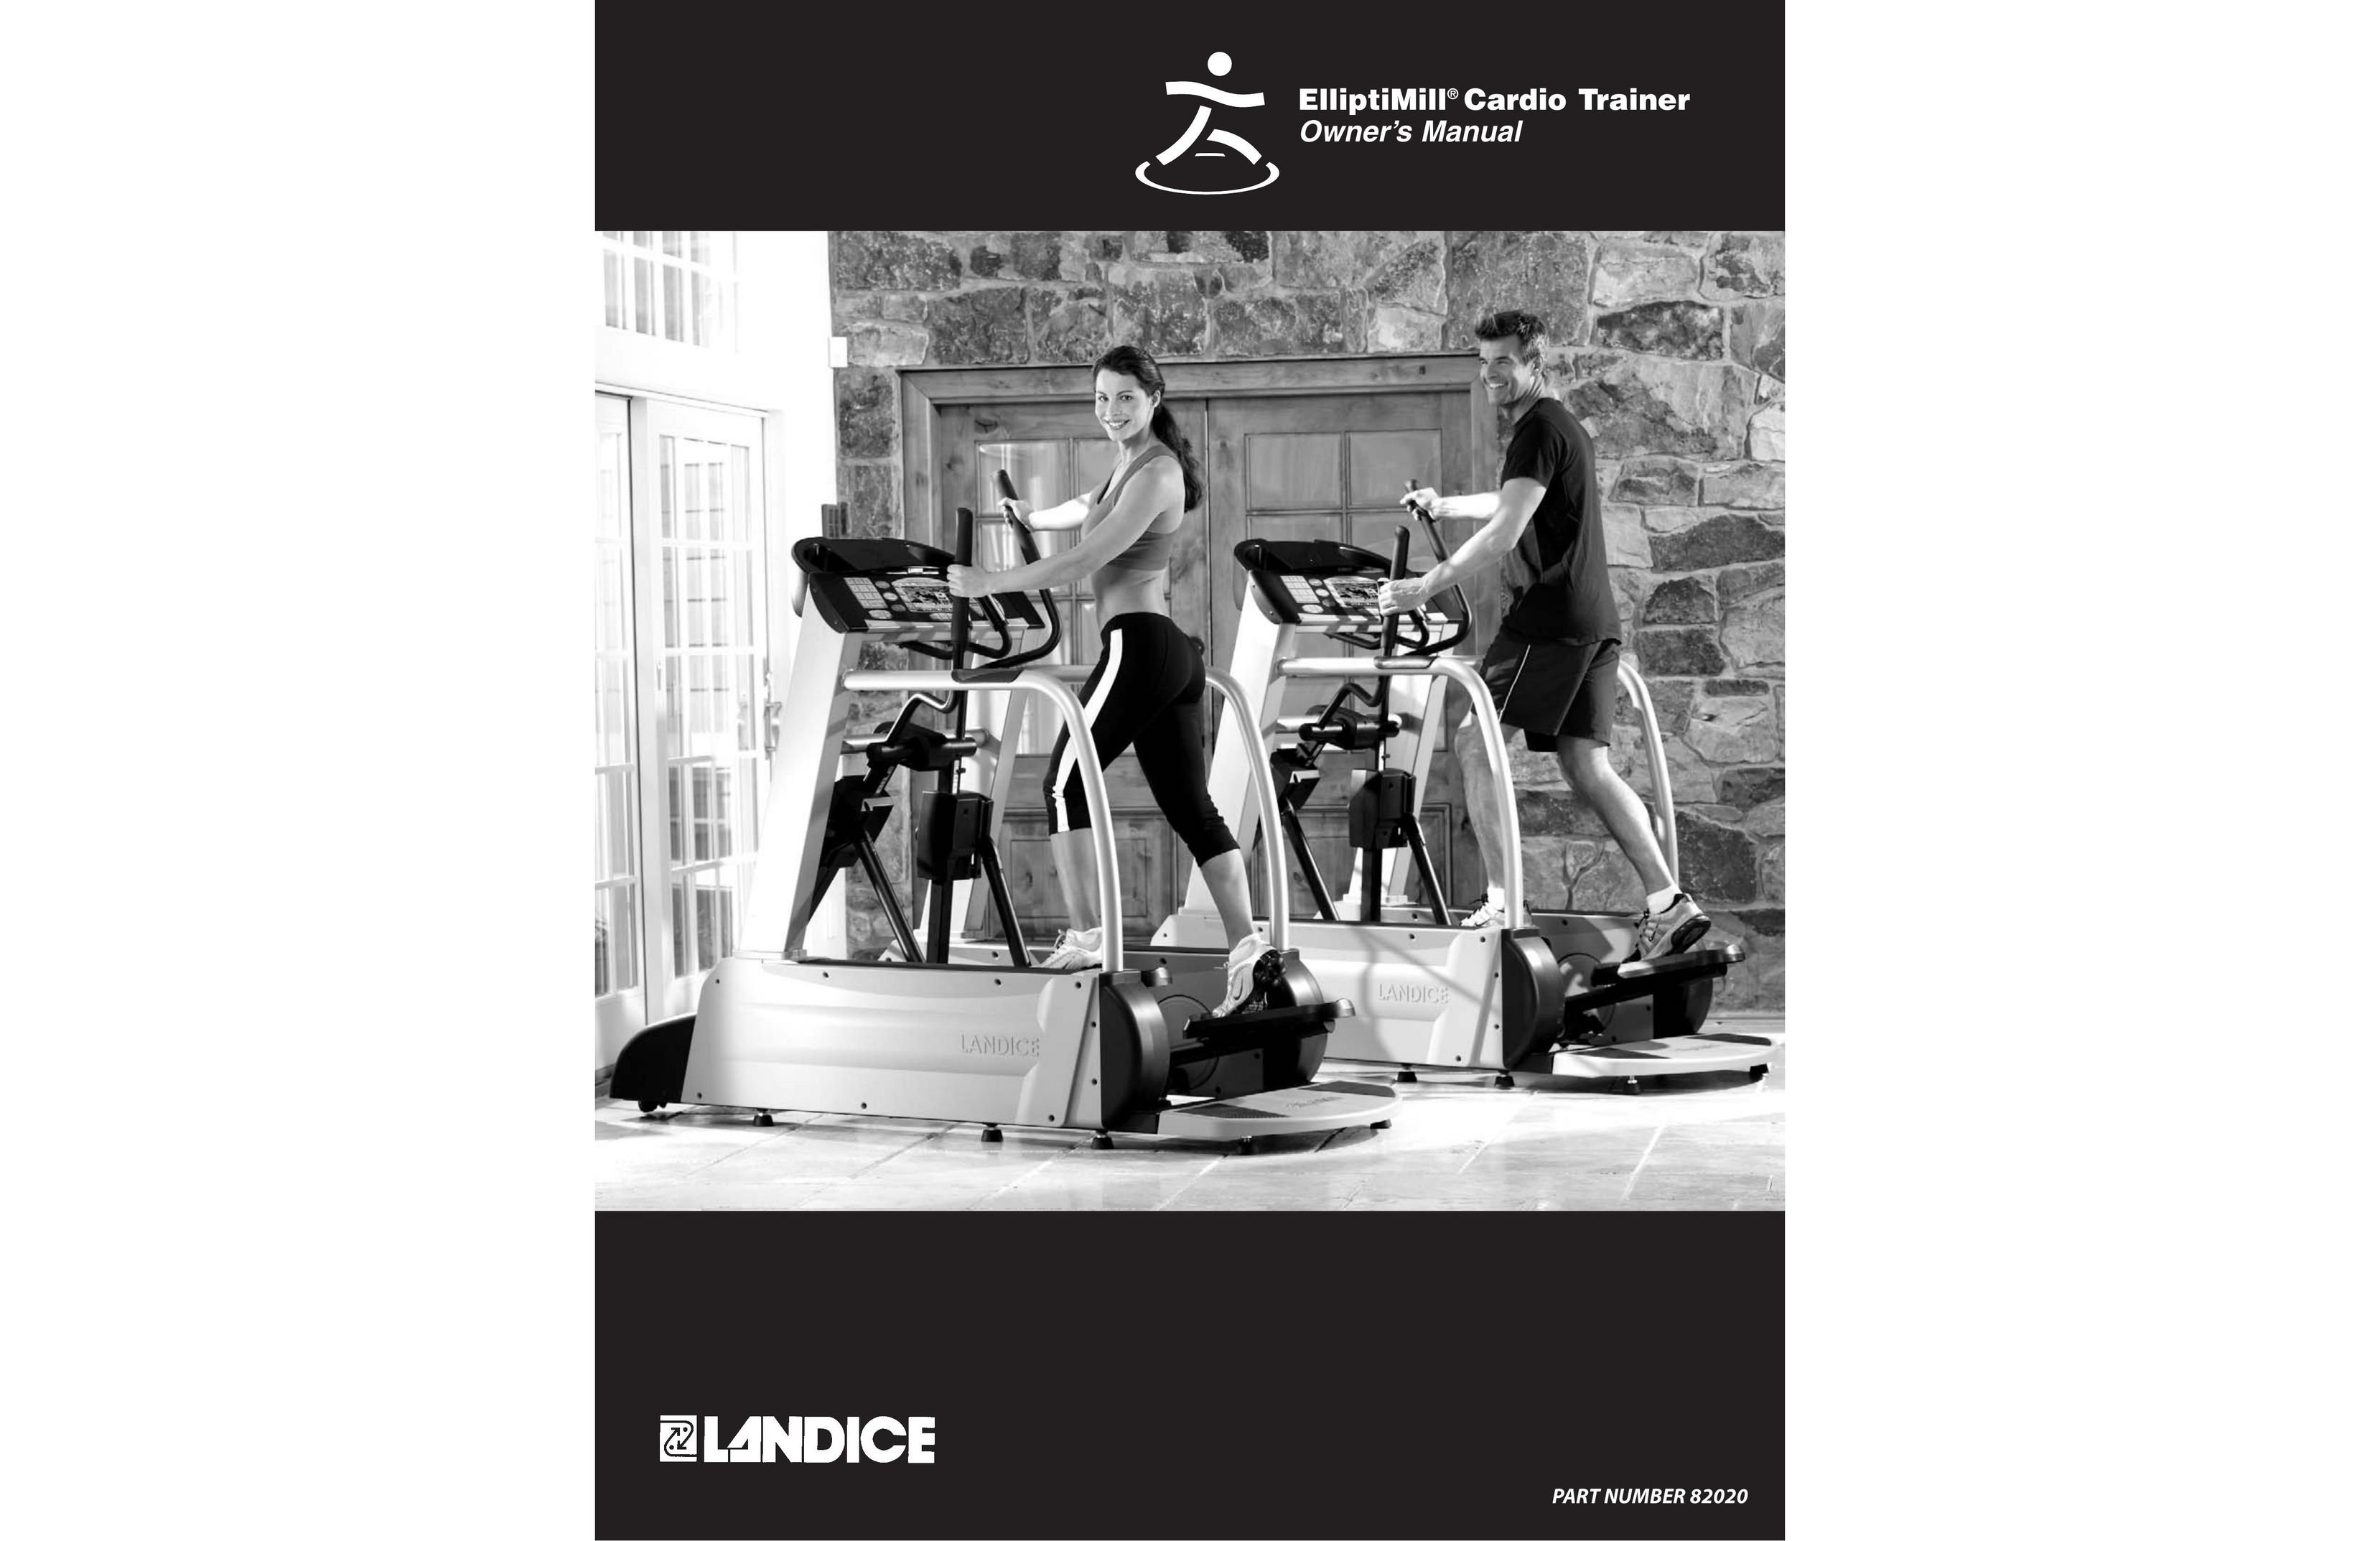 Landice ElliptiMill Home Gym User Manual